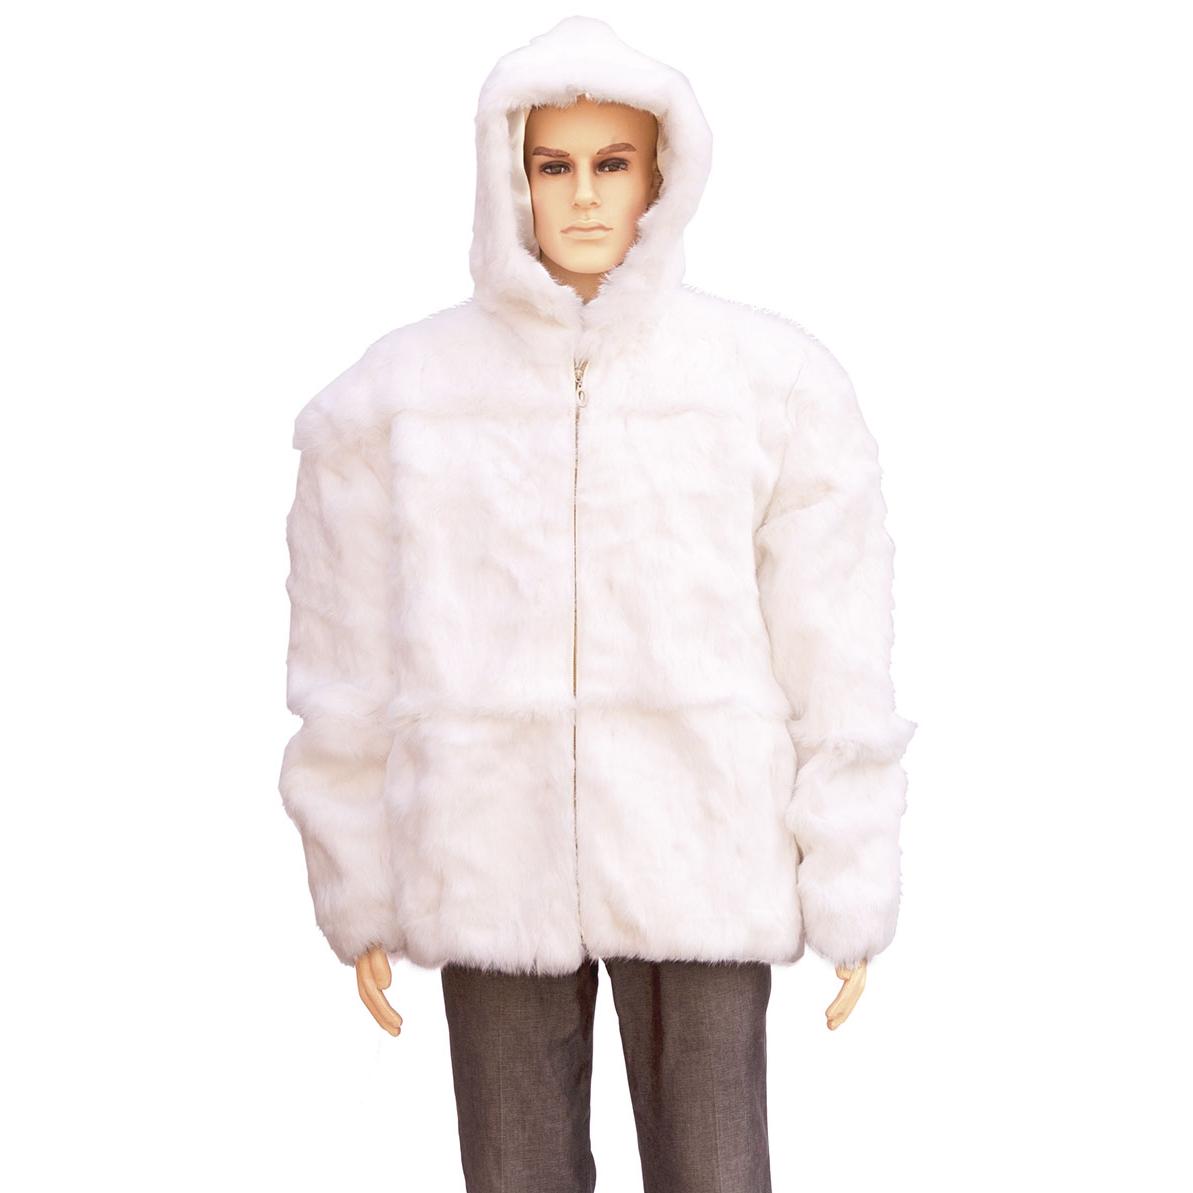 Winter Fur White Full Skin Rabbit Jacket With Detachable Hood M05R02WT ...